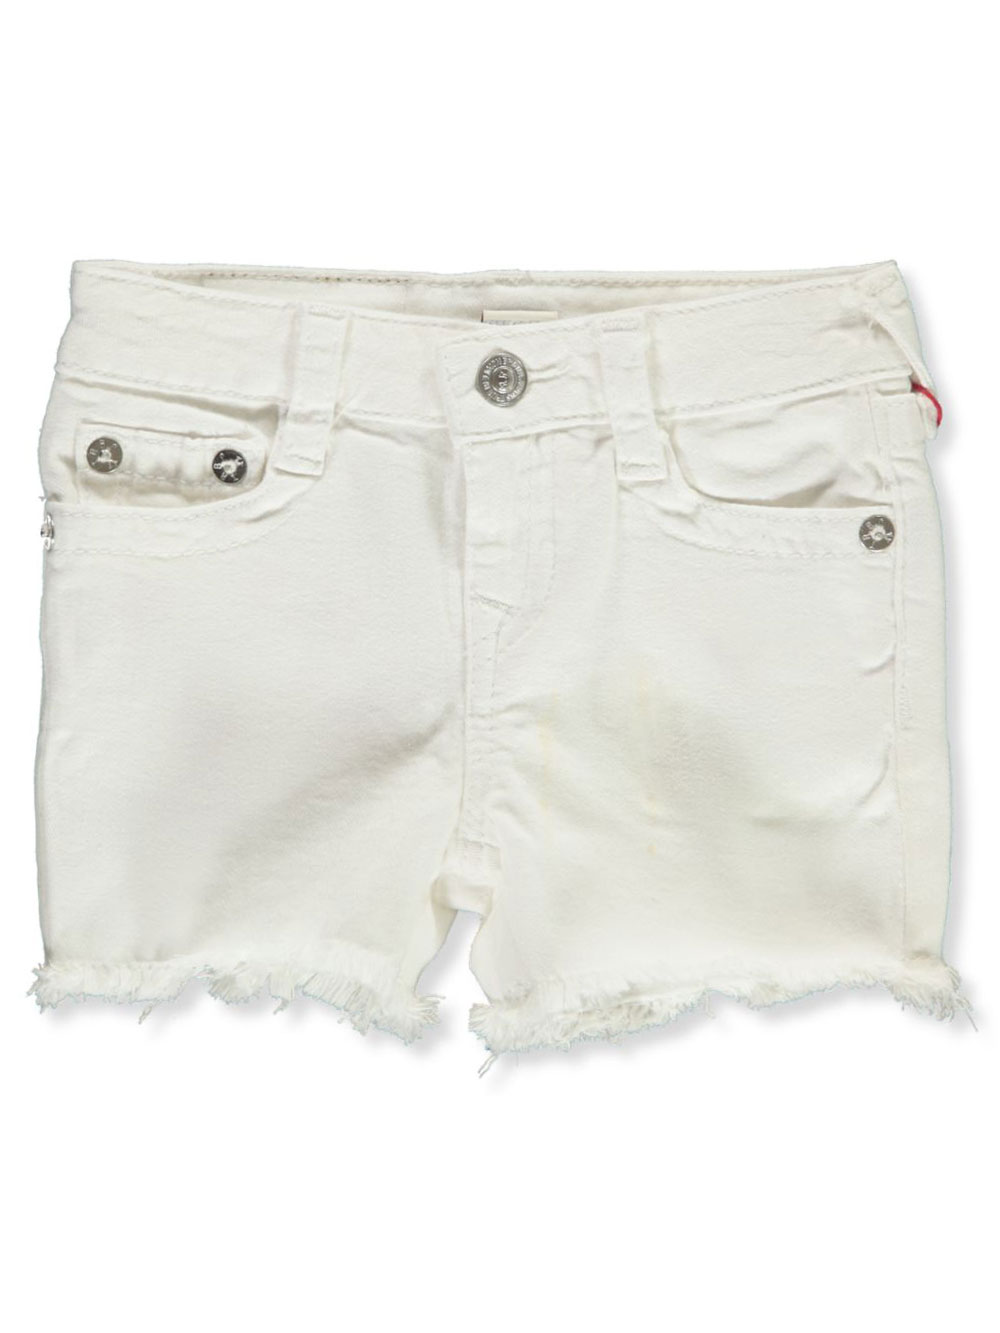 Girls' Denim Short Shorts by True 